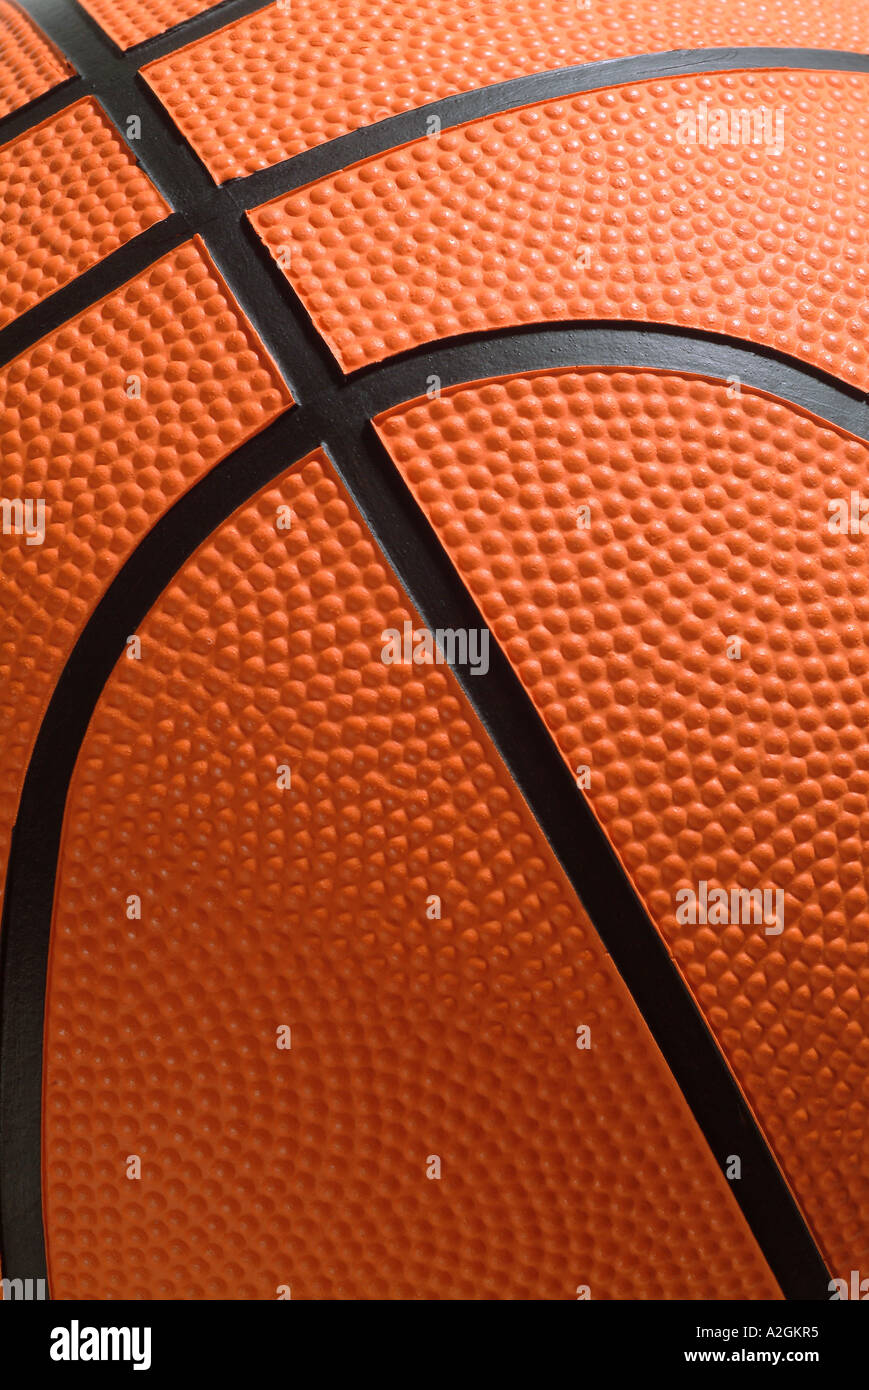 Basket-ball Banque D'Images